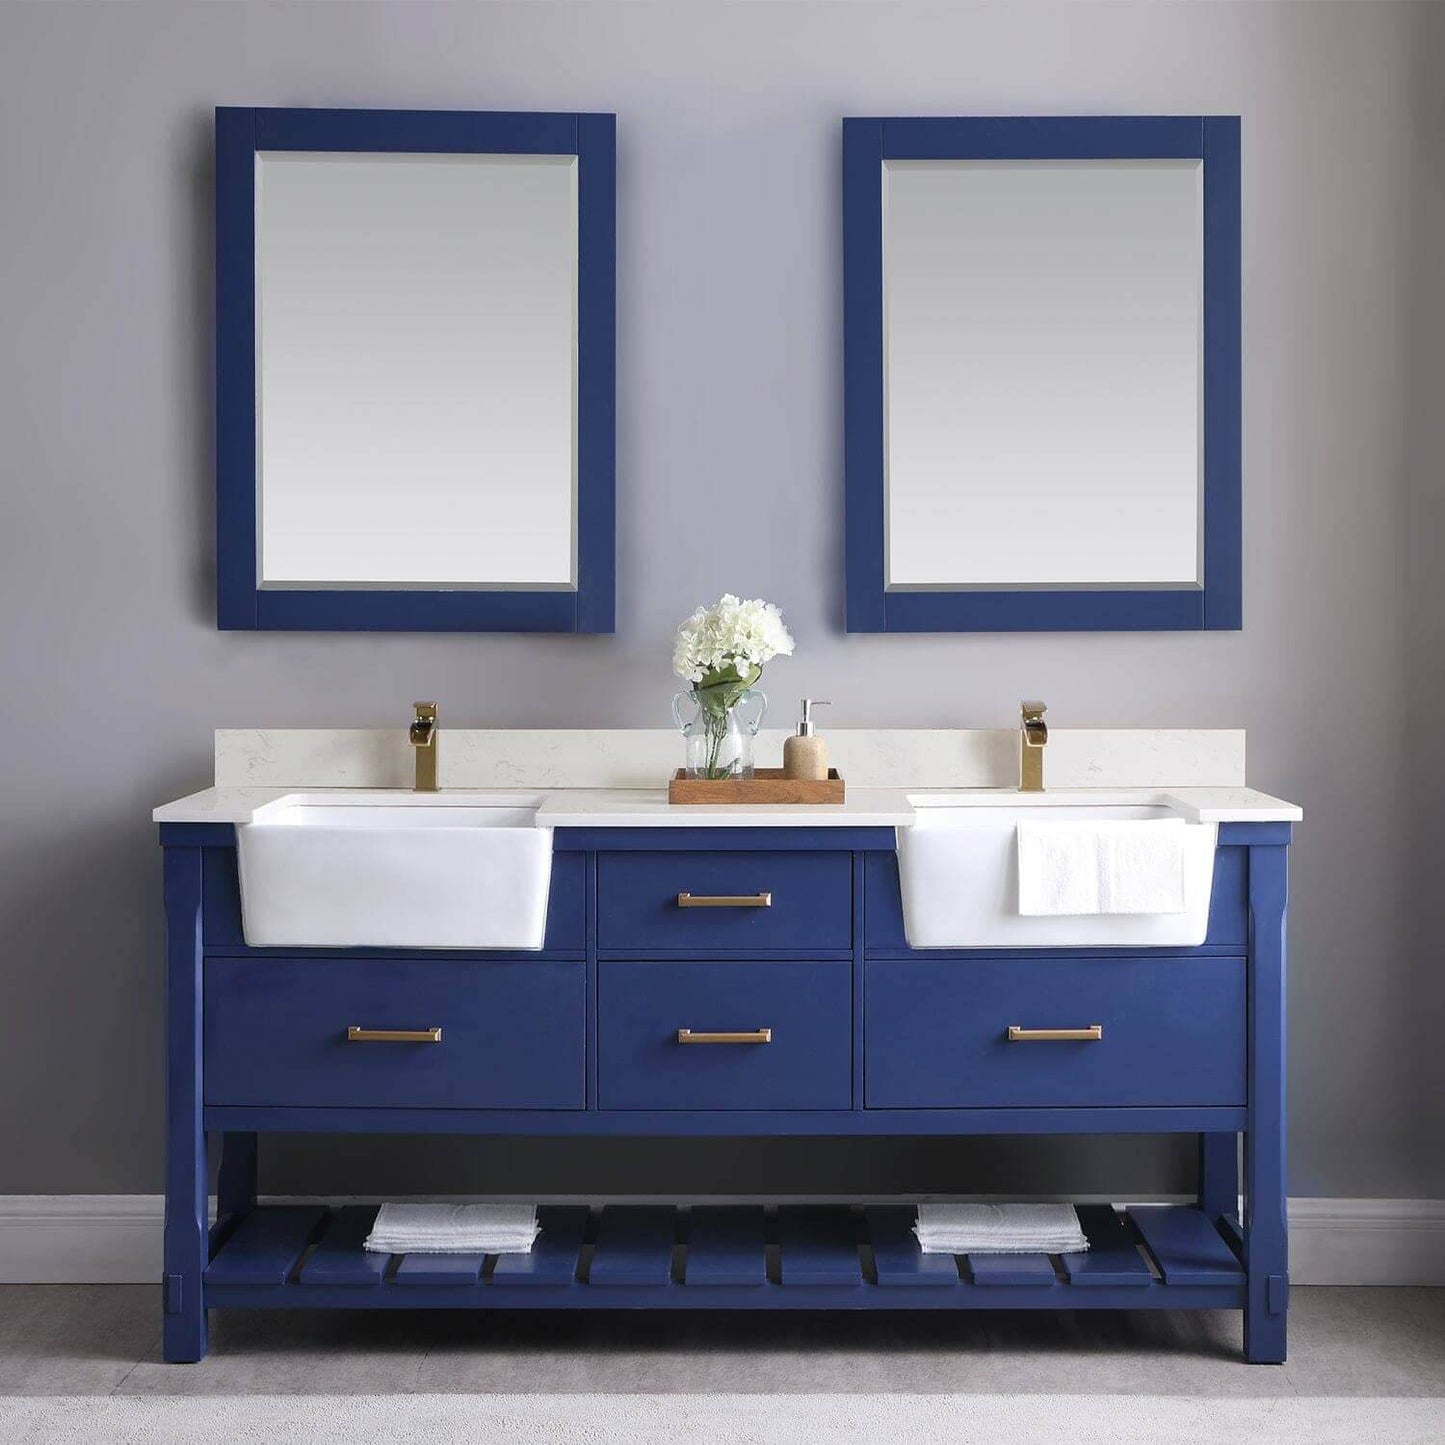 Bathroom Mirror - Altair Maribella 28W x 36H -535030-MIR-JB